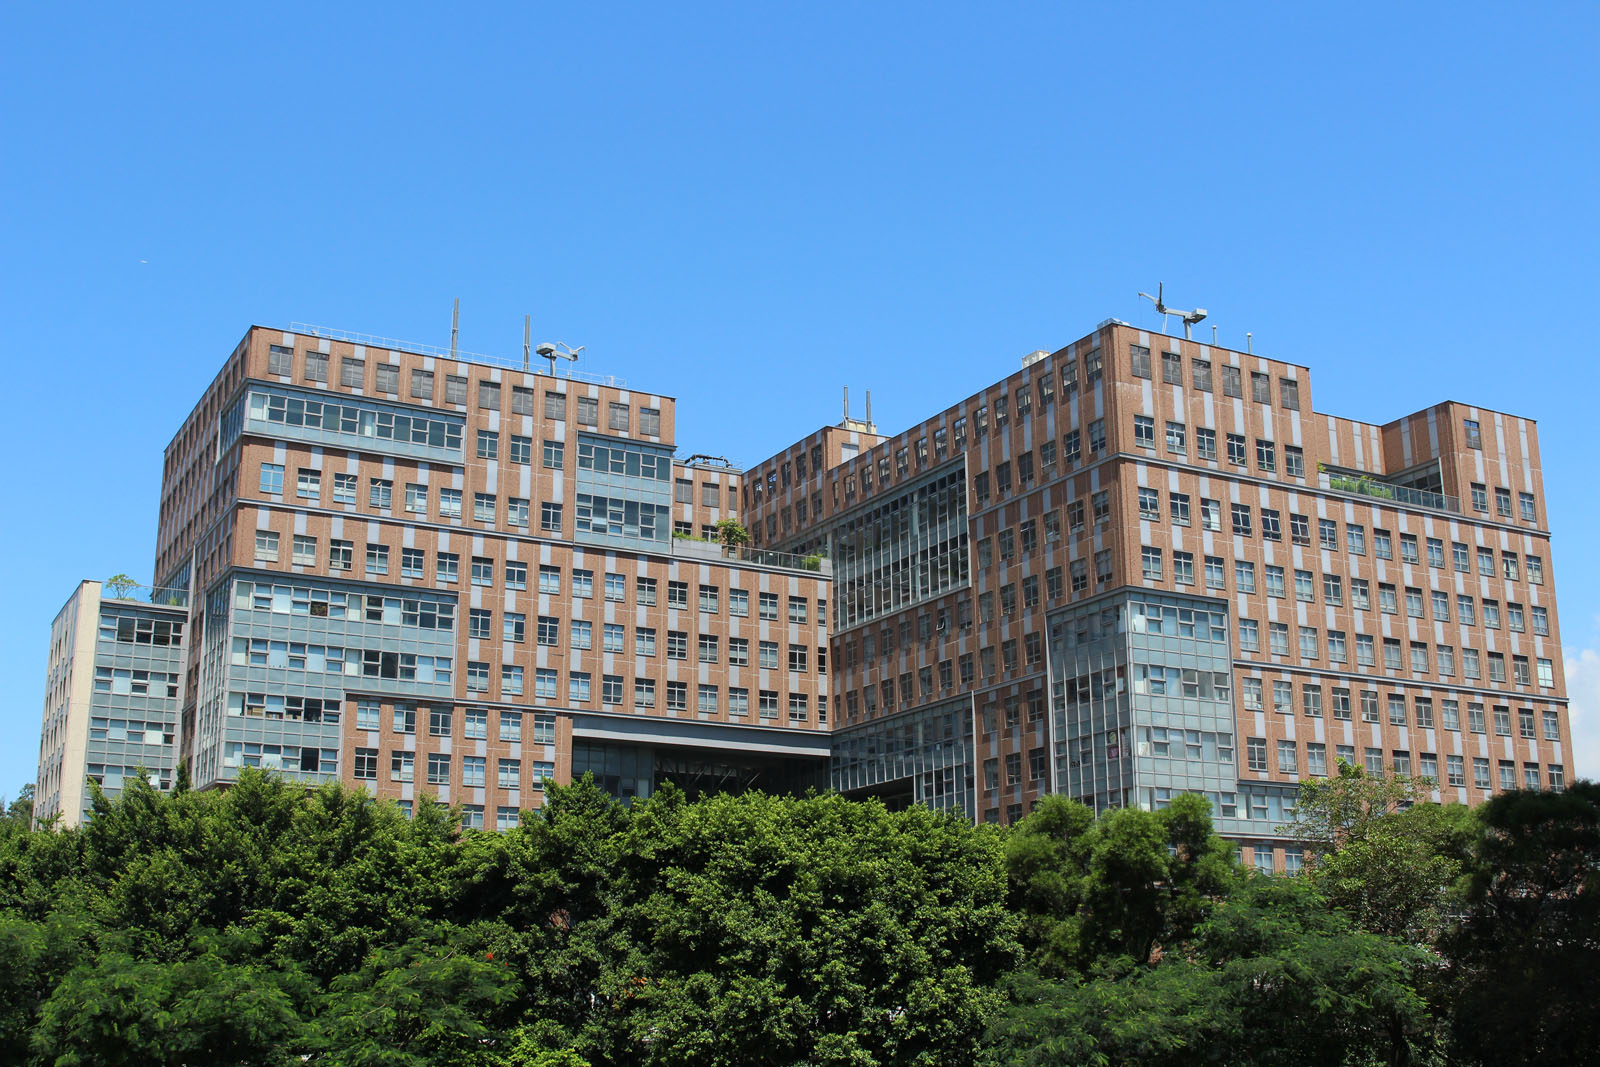 Photo 7: The Hong Kong Polytechnic University